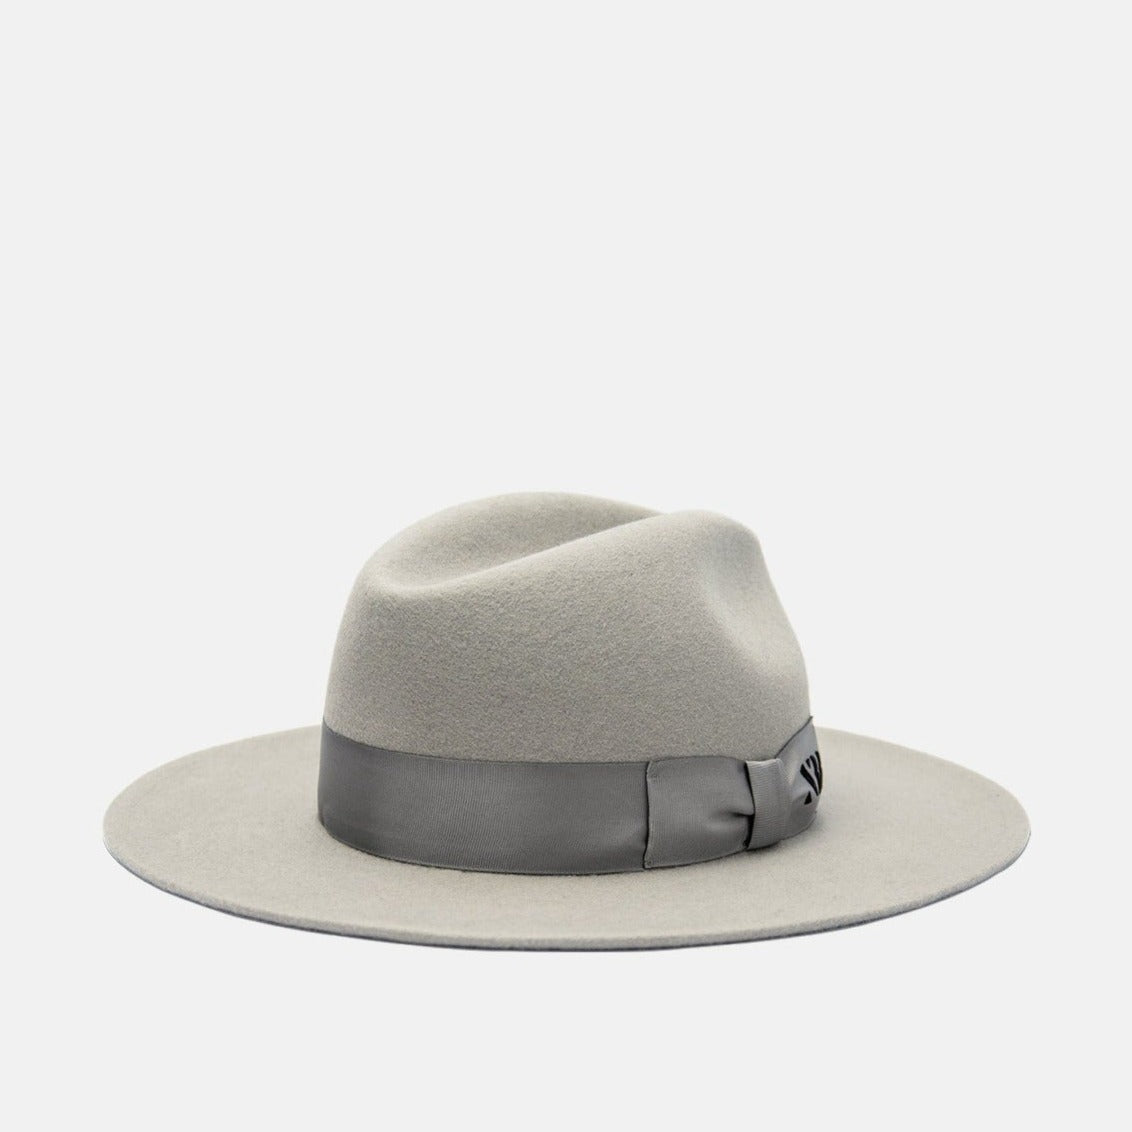 NTHIRTYTHREE - N33 - Fedora Felt Hat - Rancher Cloud Grey - handmade in Europe